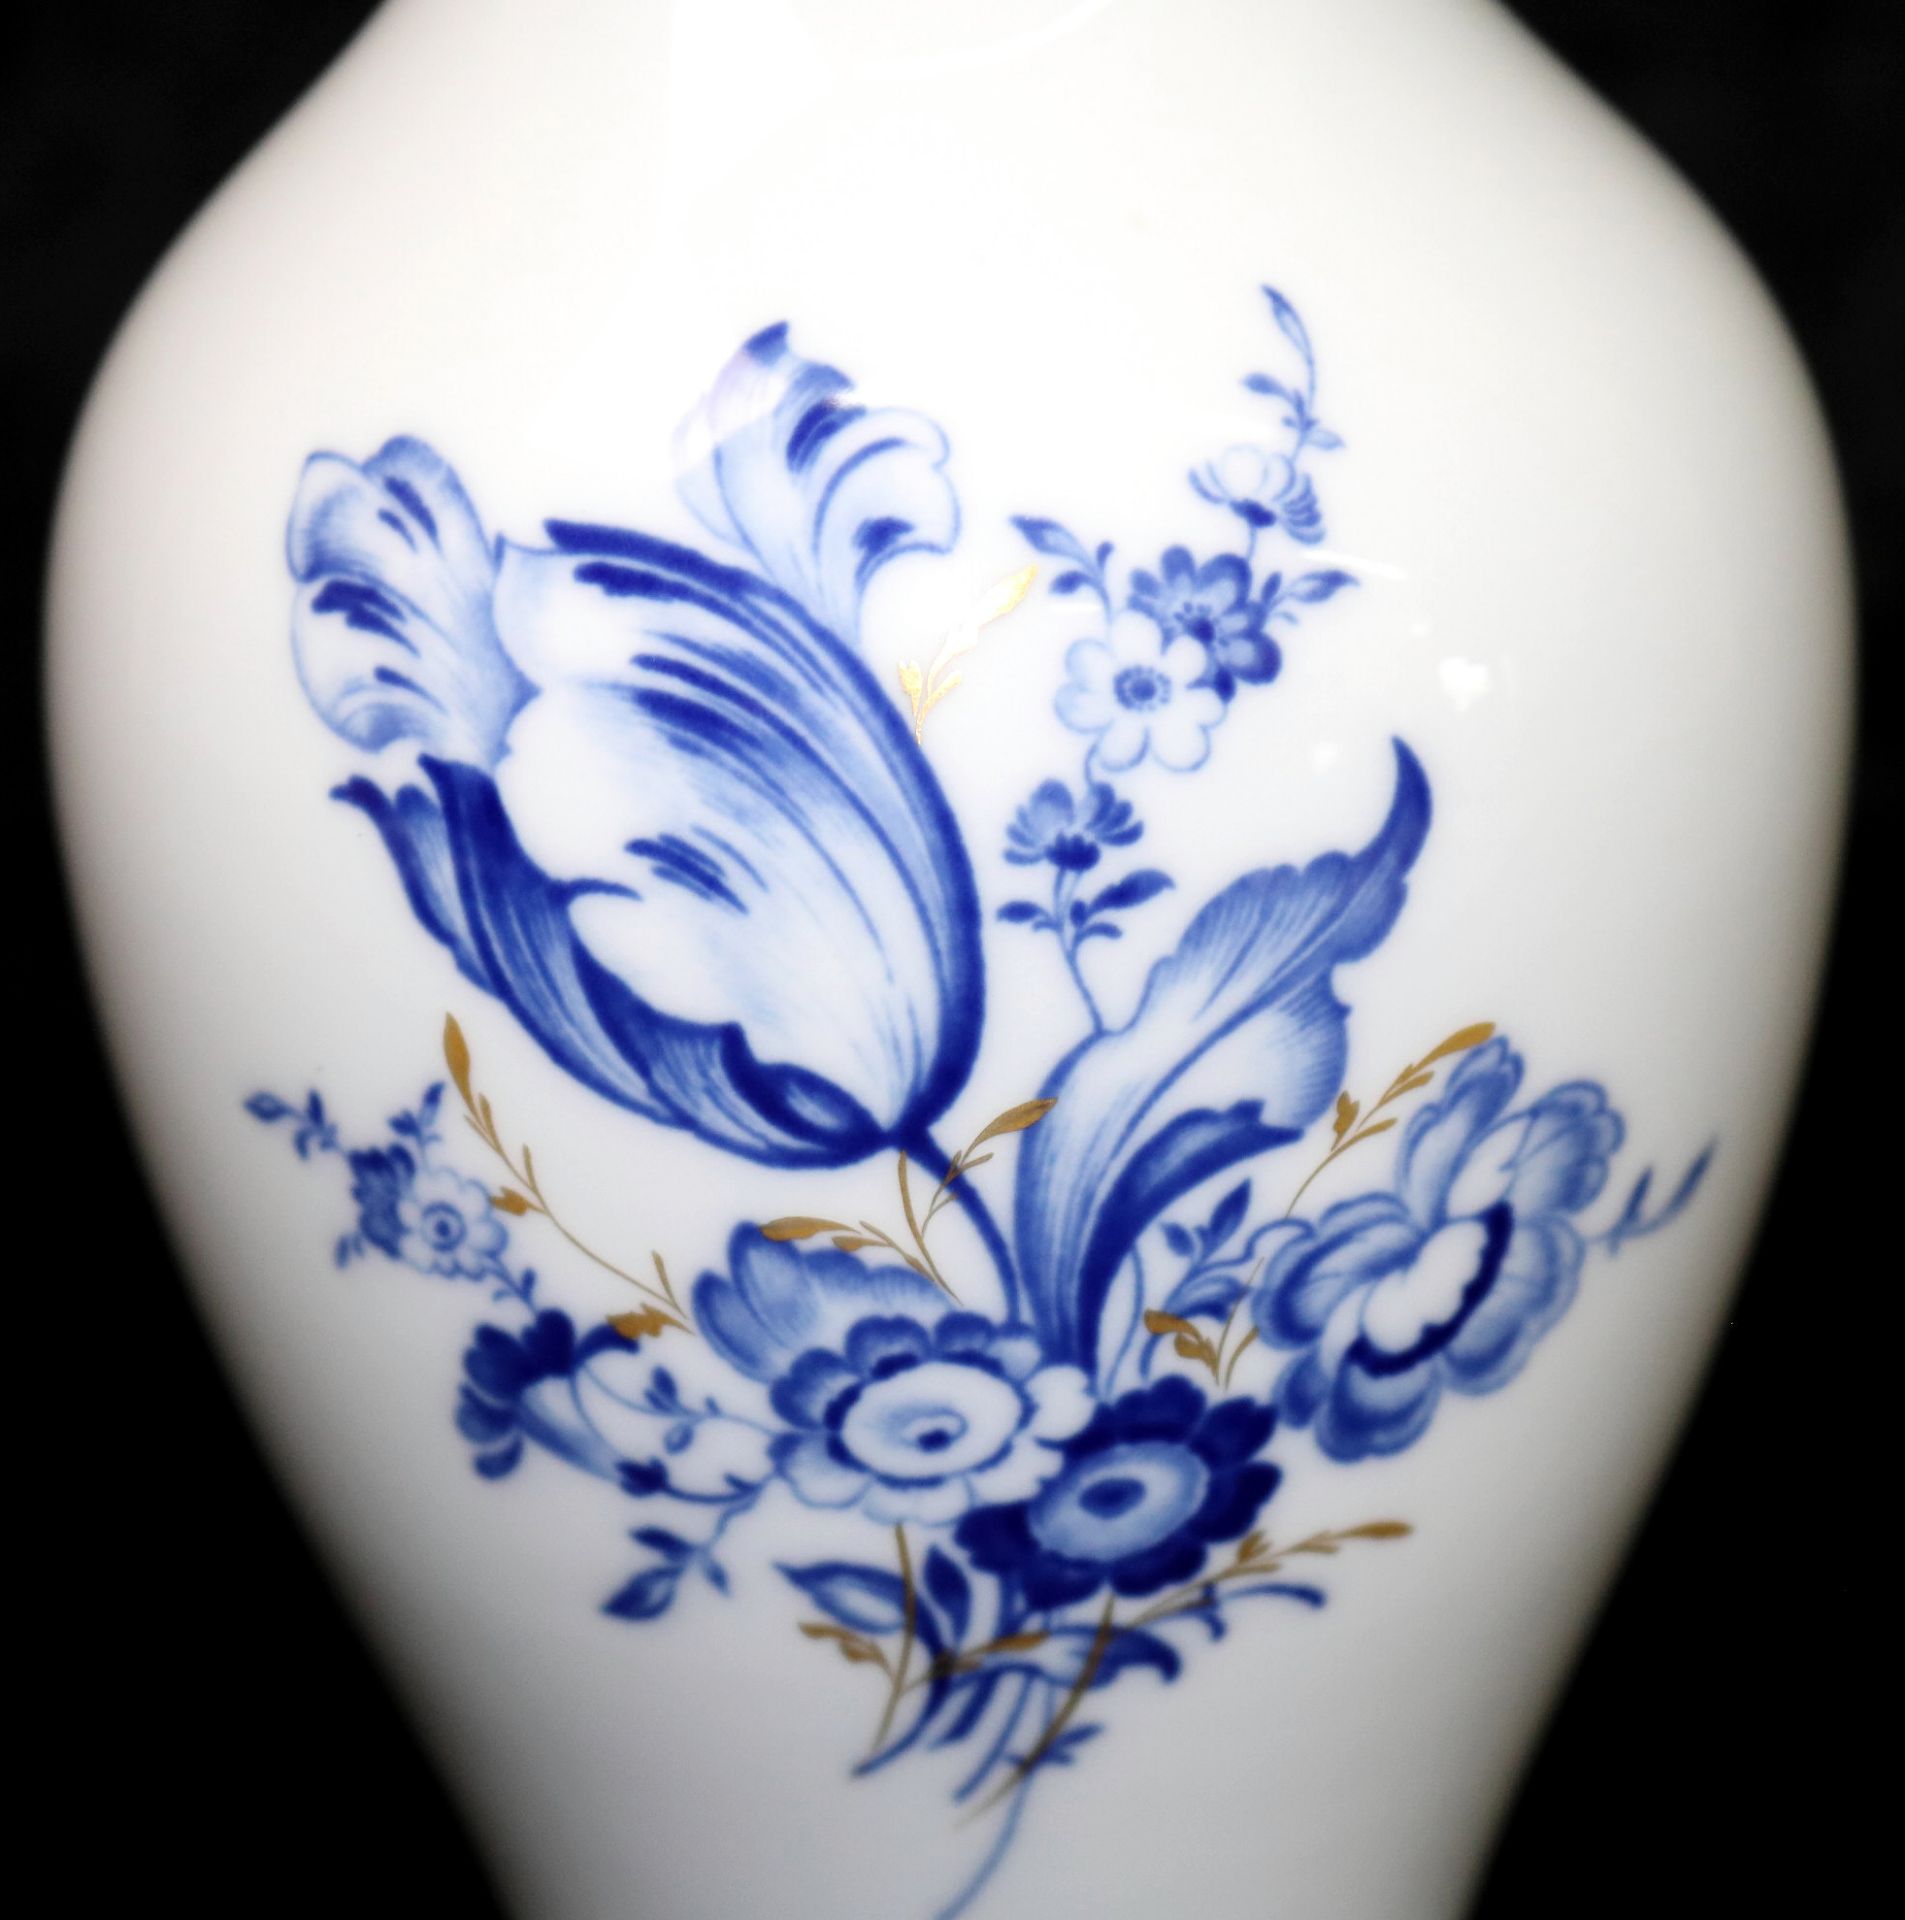 Meissen Porzellan, Vase blaues Blumendekor, 2. Wahl, gekreuzte Schwerter, 20. Jh. - Image 2 of 4